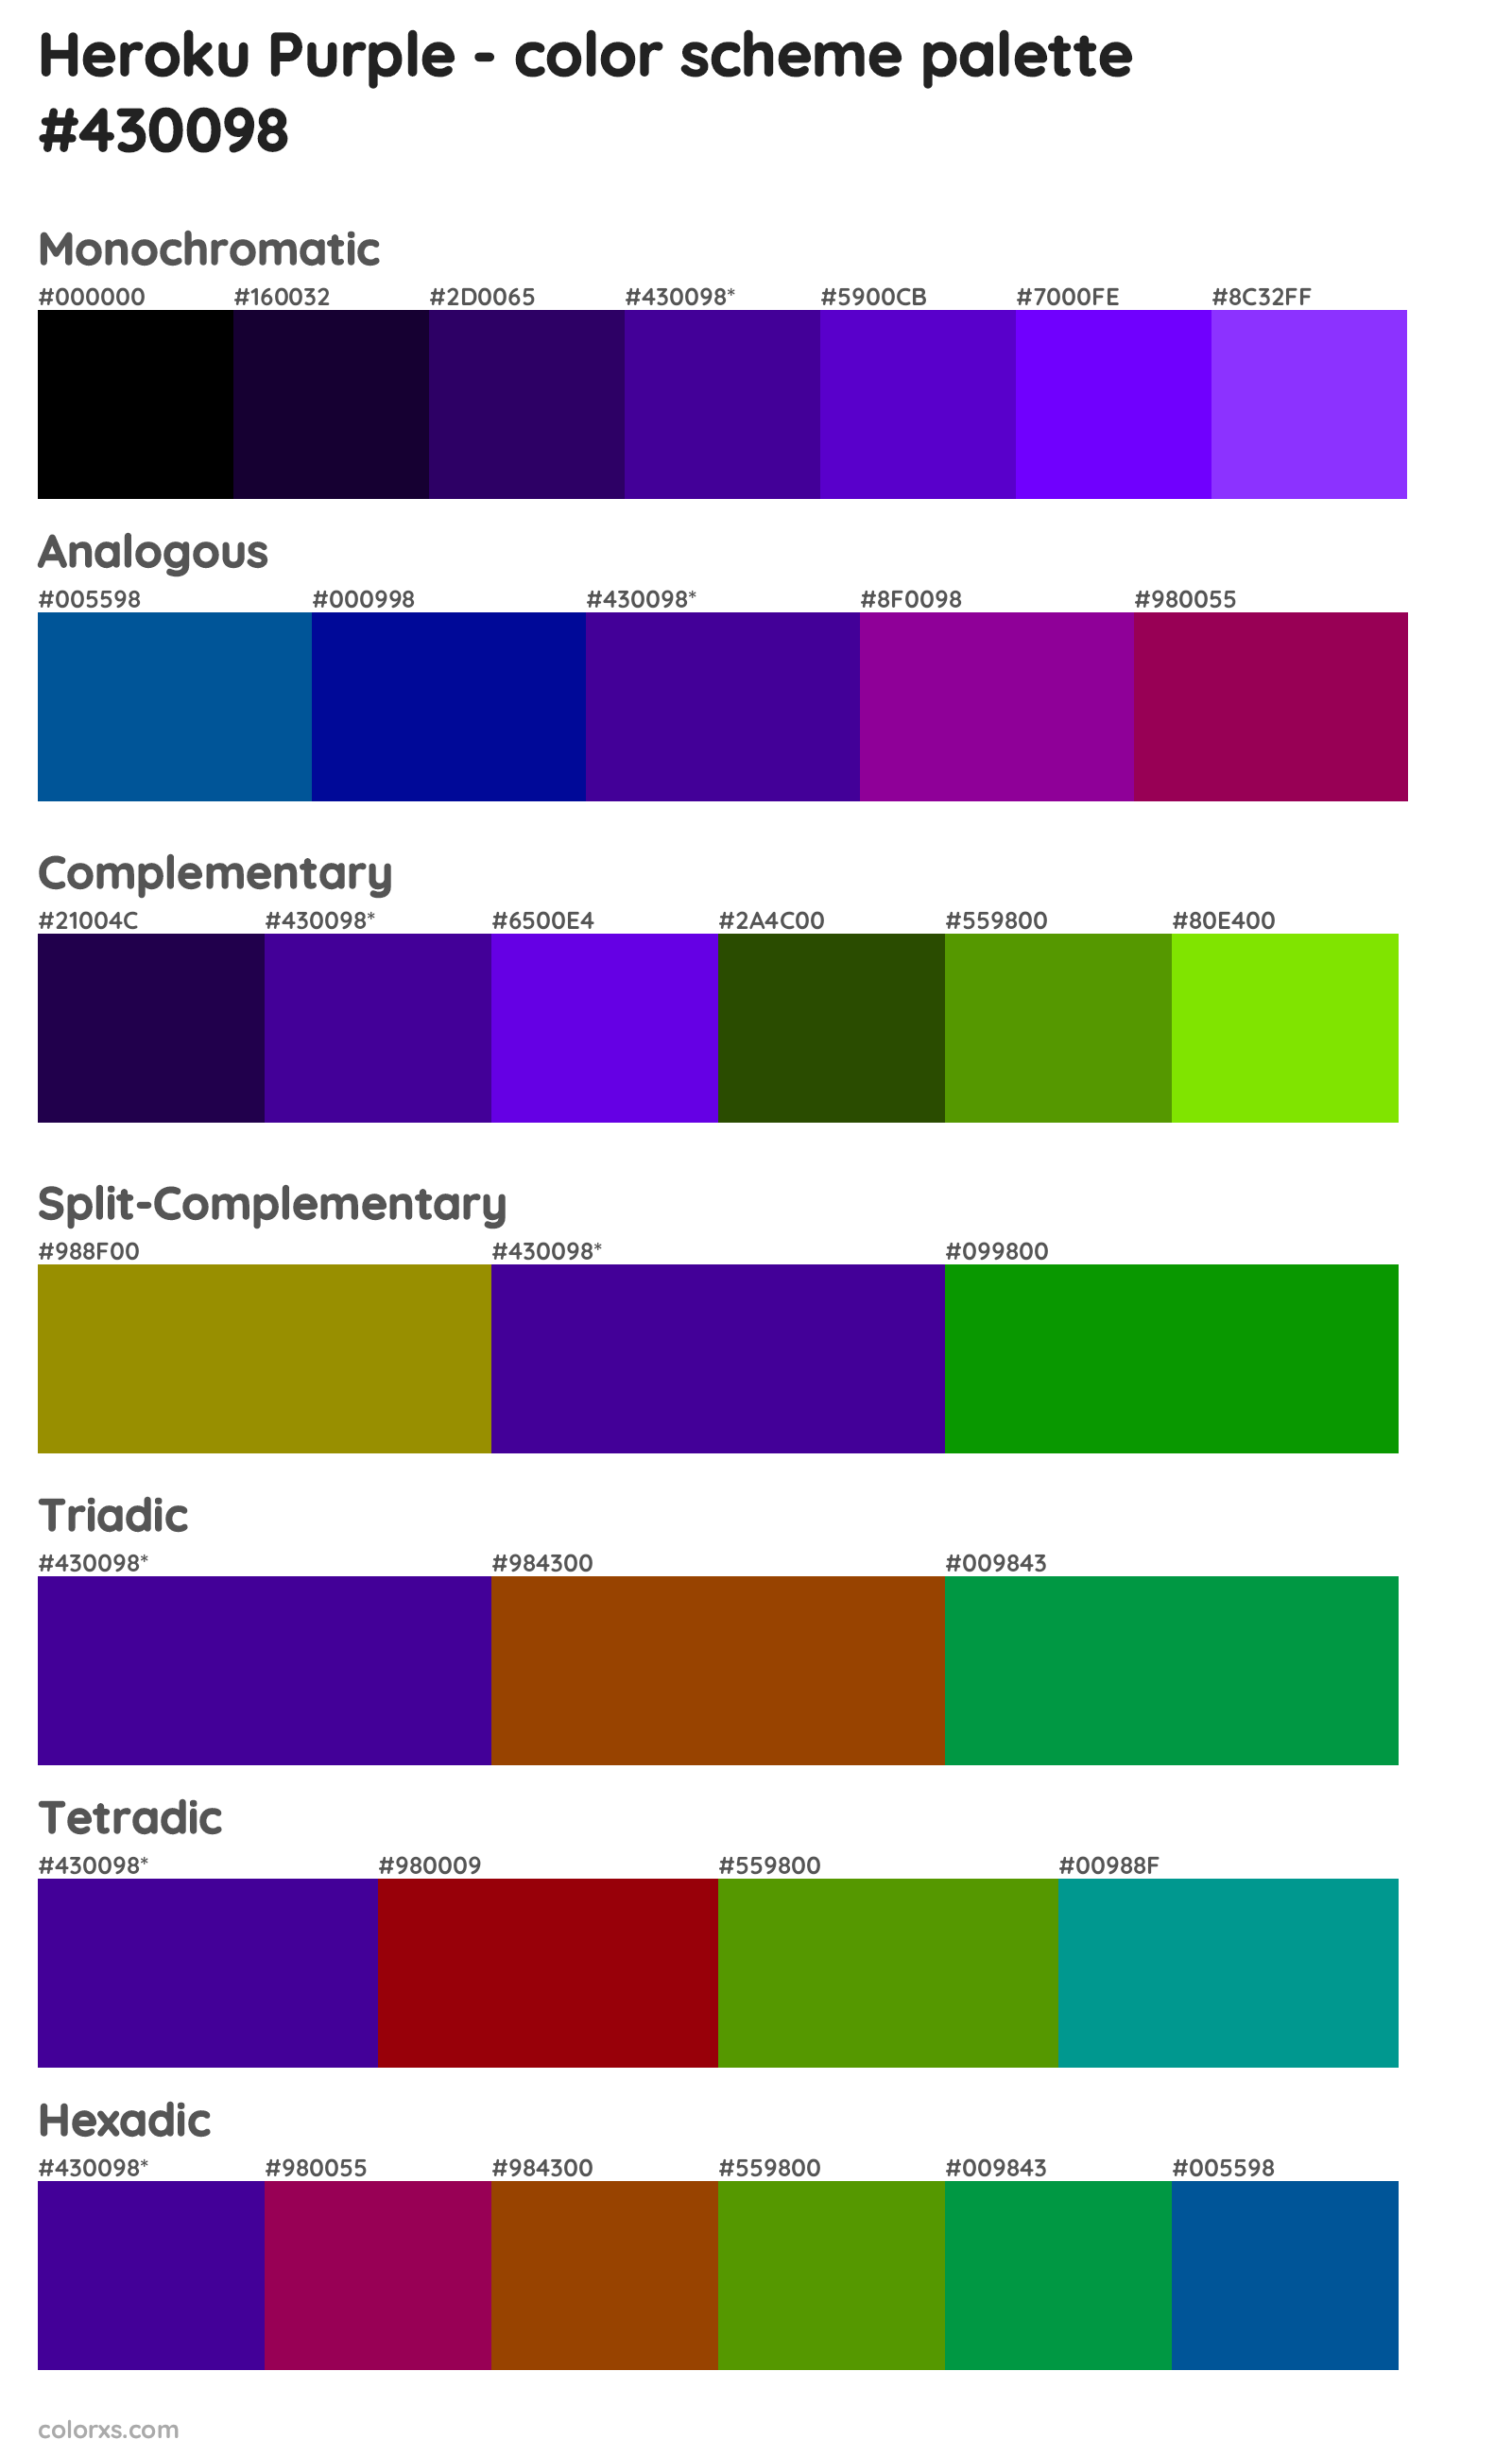 Heroku Purple Color Scheme Palettes